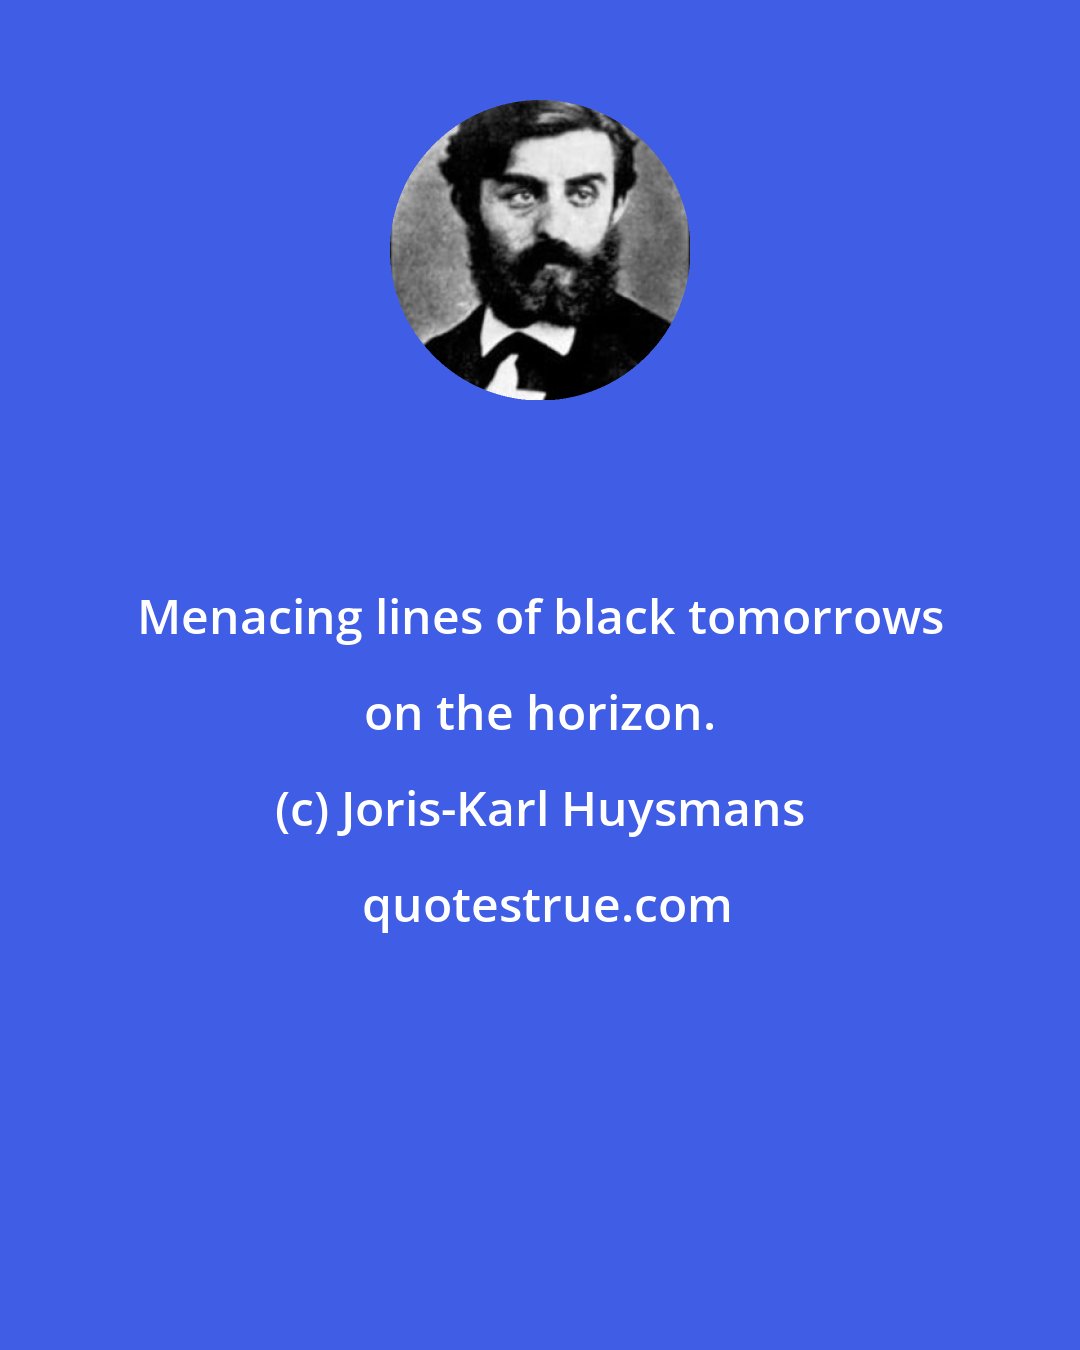 Joris-Karl Huysmans: Menacing lines of black tomorrows on the horizon.